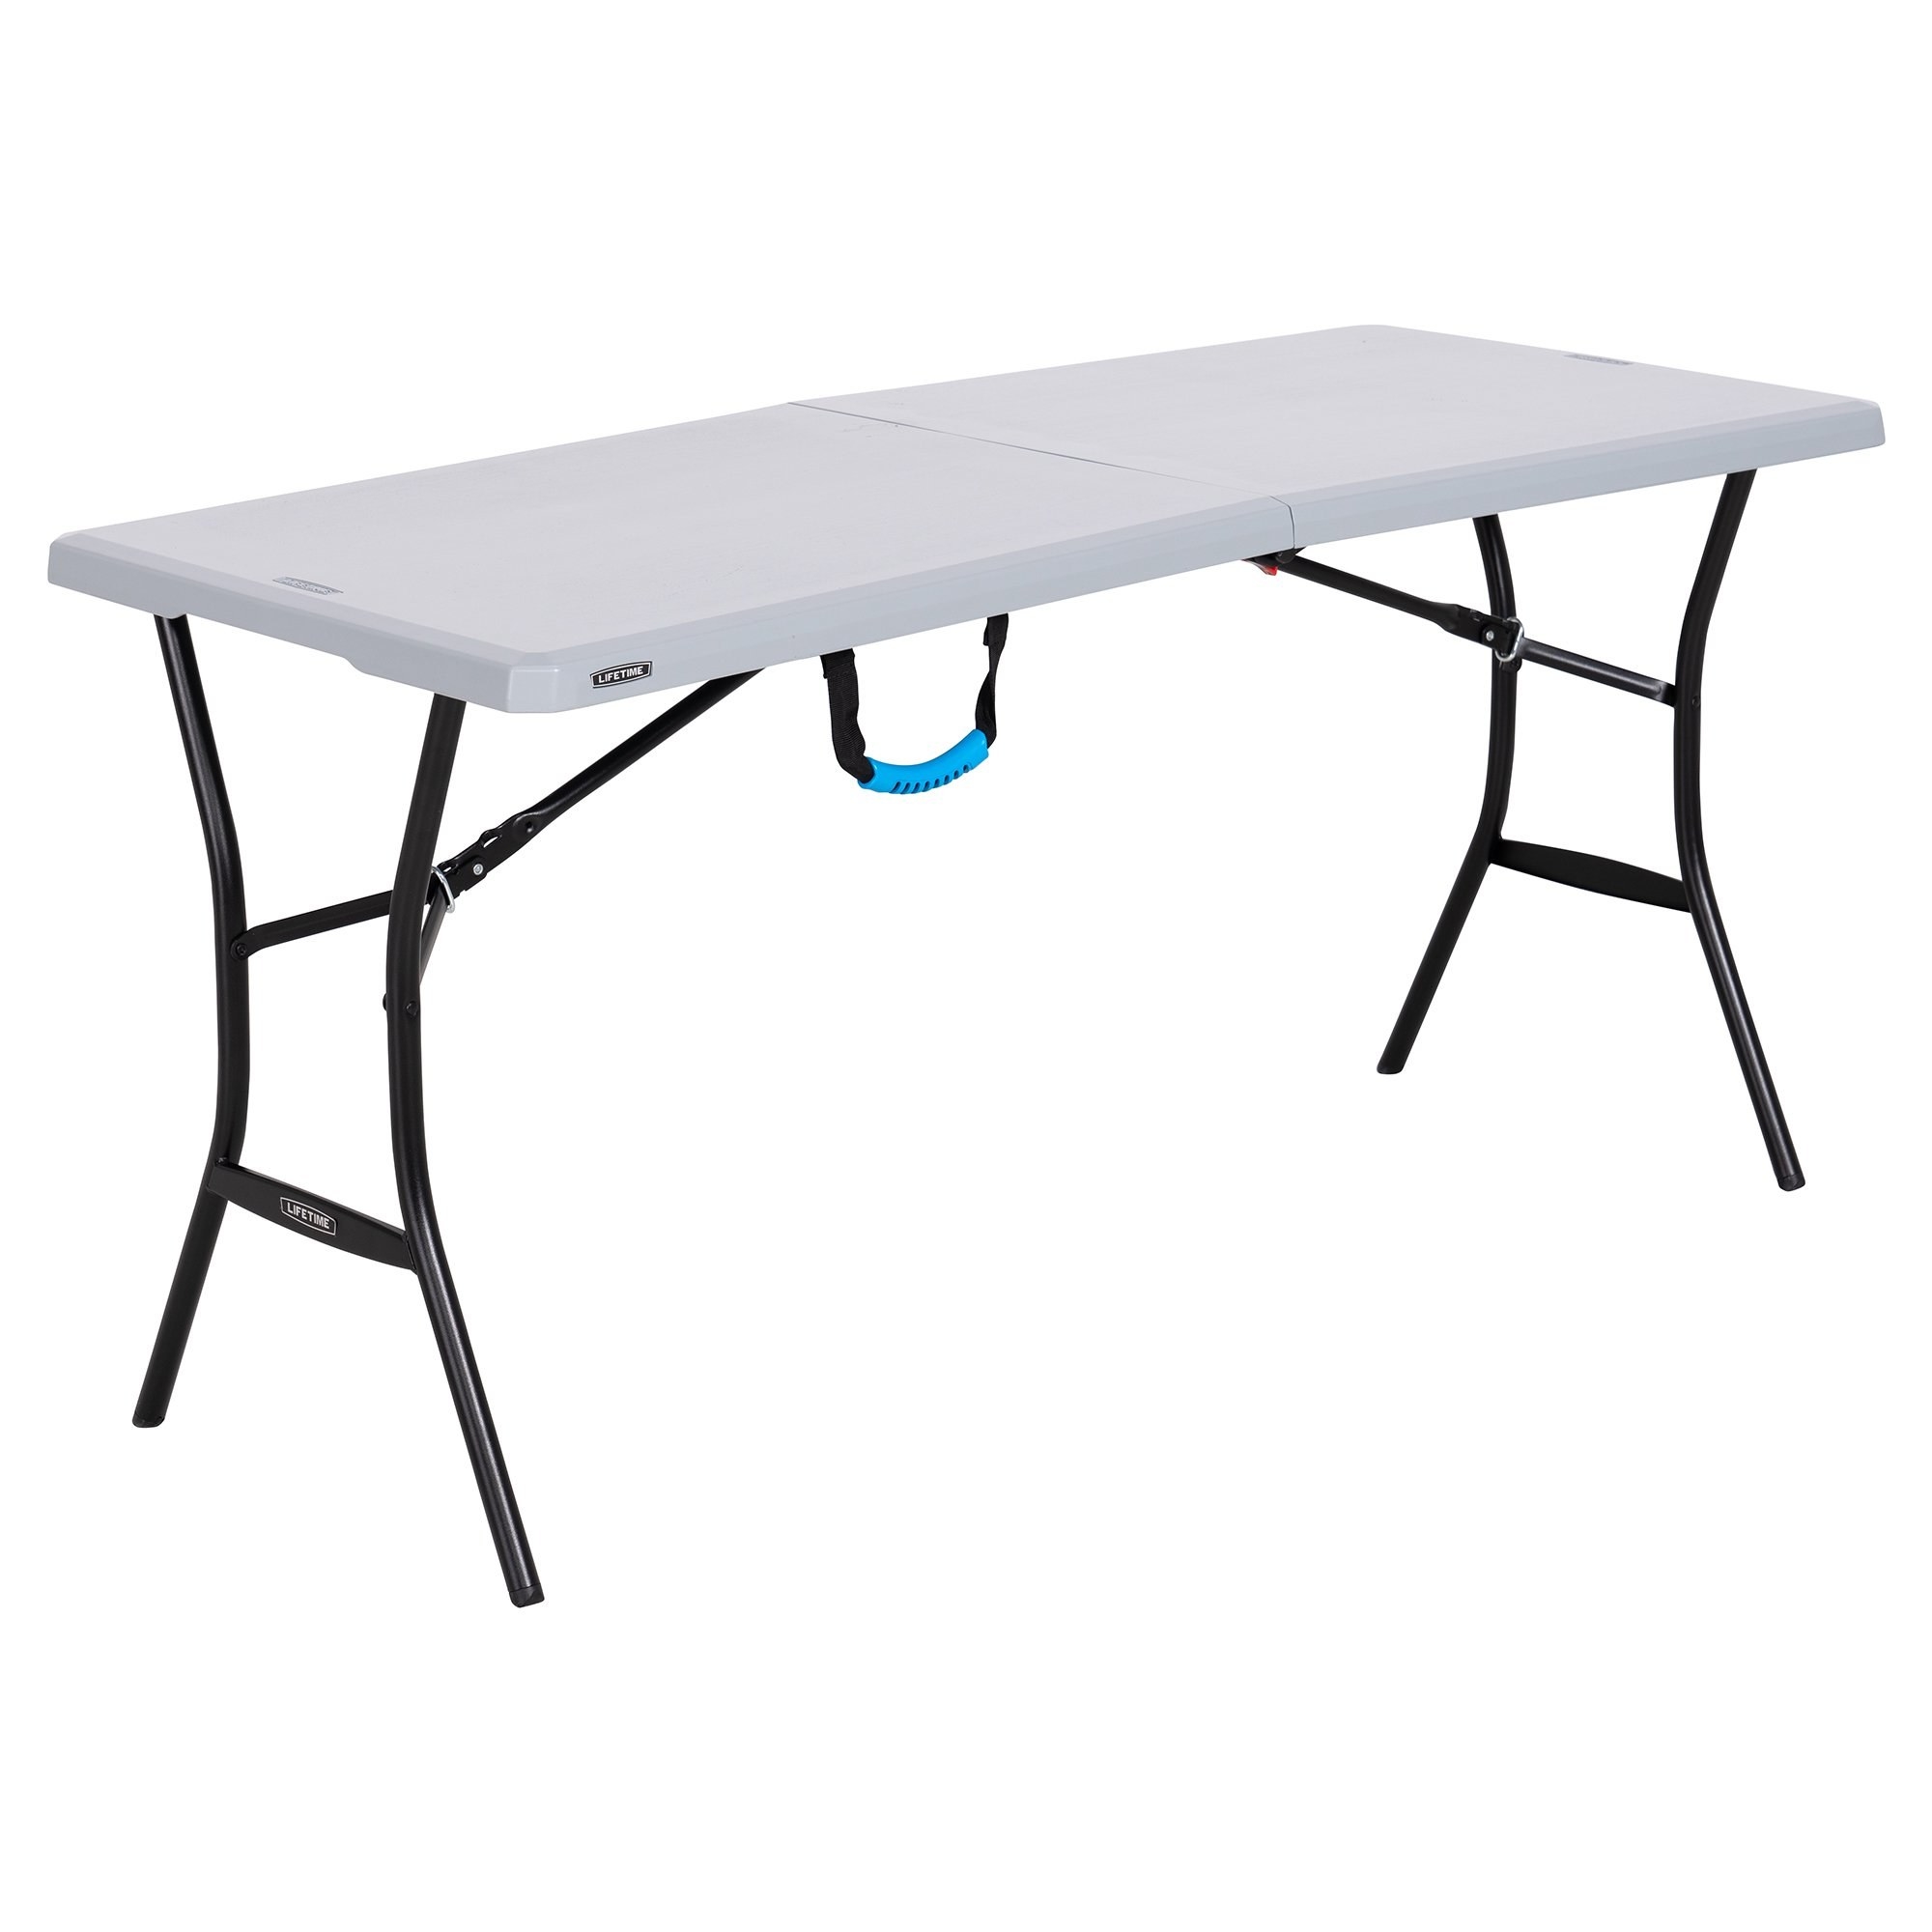 gray indoor/outdoor folding table